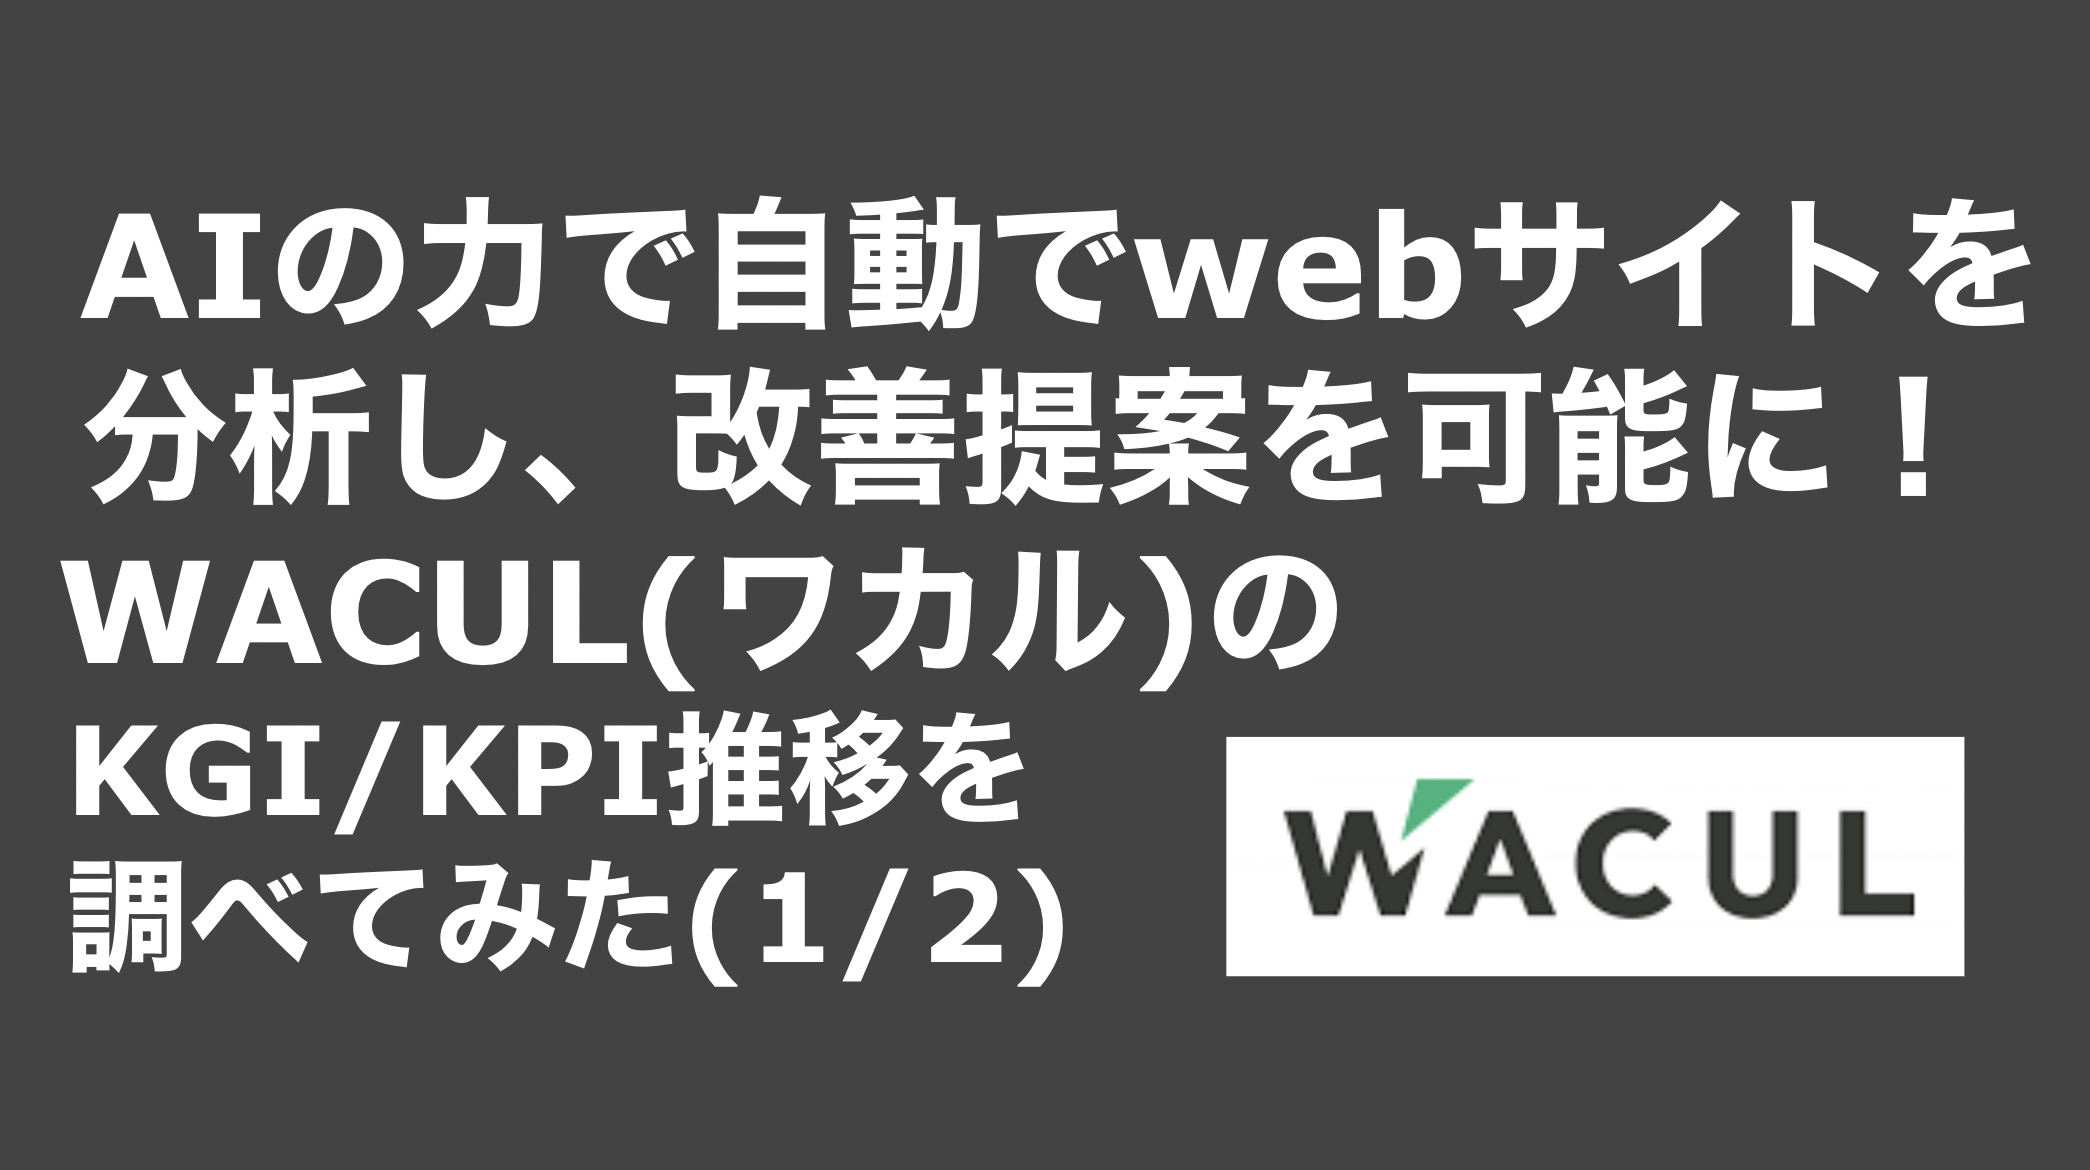 saaslife_ AIの力で自動でwebサイトを分析し、改善提案を可能に！WACUL(ワカル)のKGI/KPI推移を調べてみた(1/2)